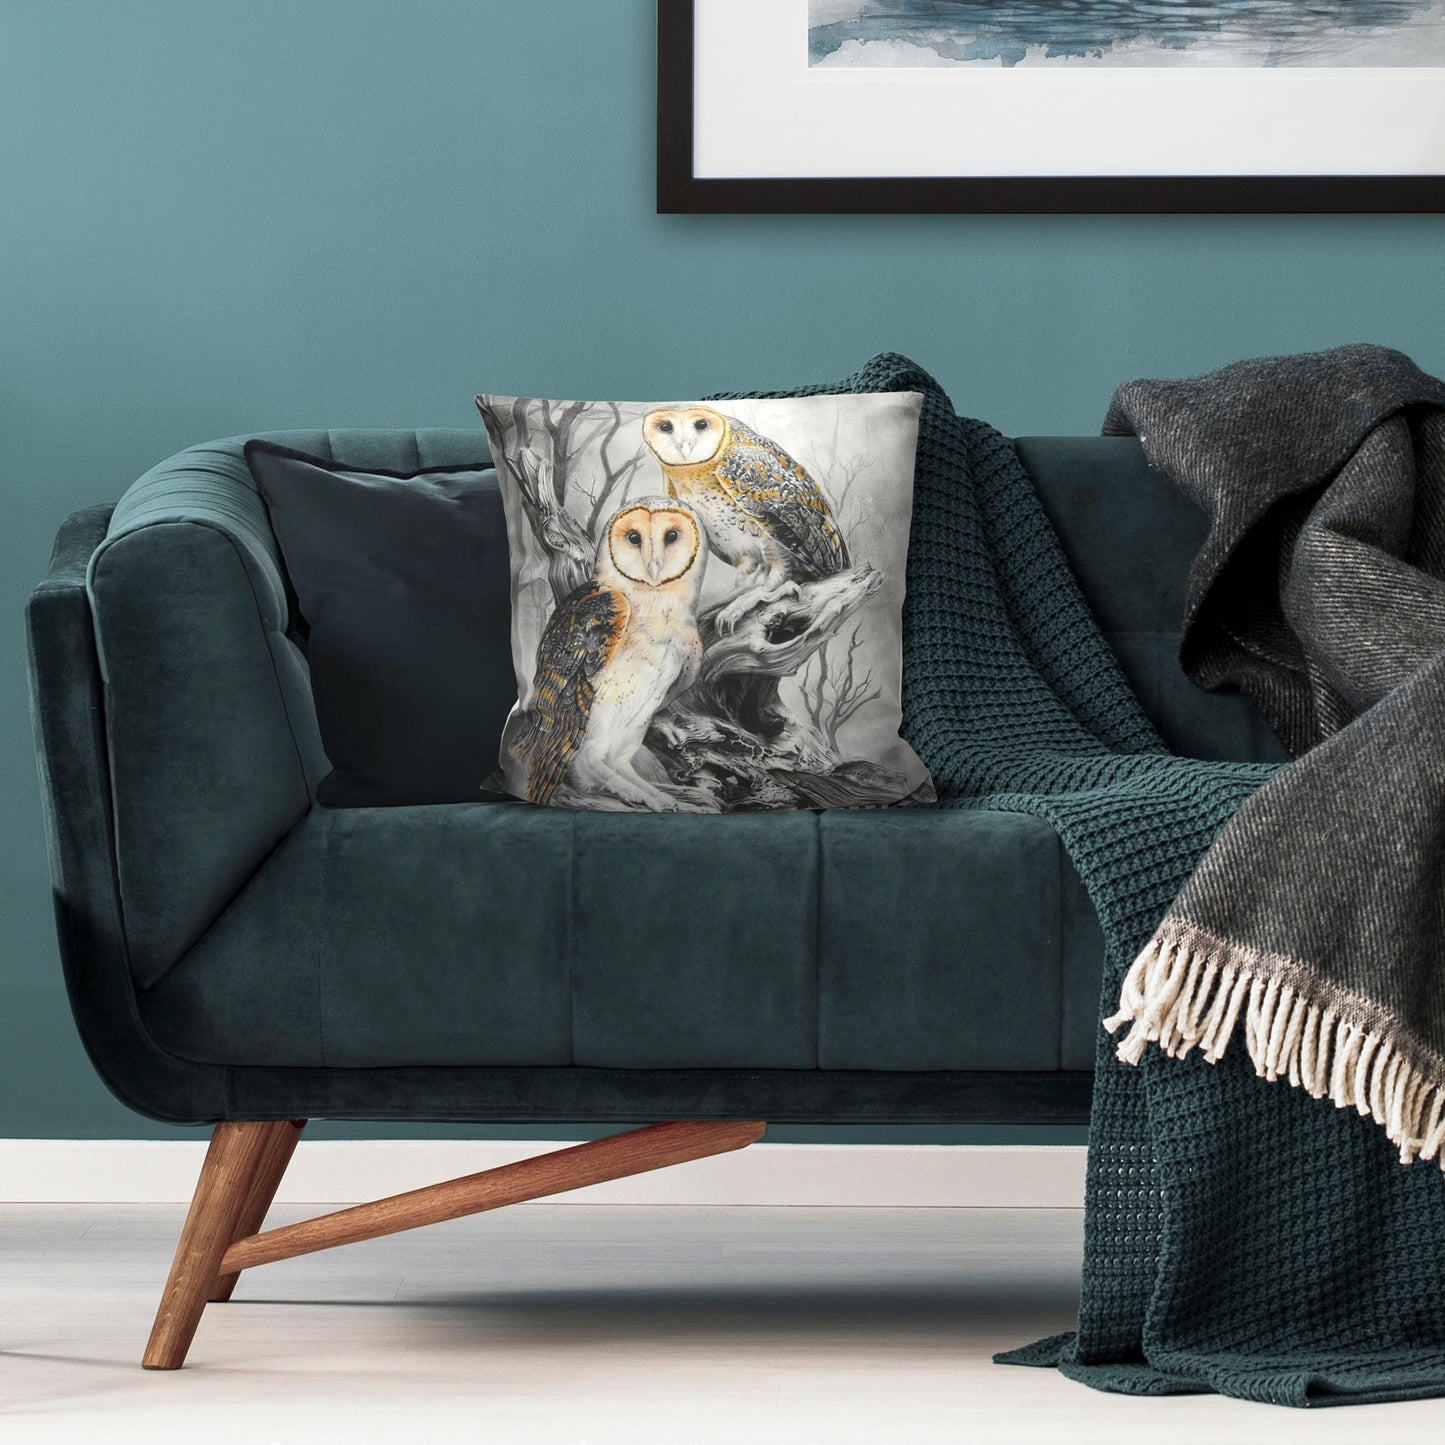 Cushion cover featuring 'Tasmanian Masked Owls' artwork